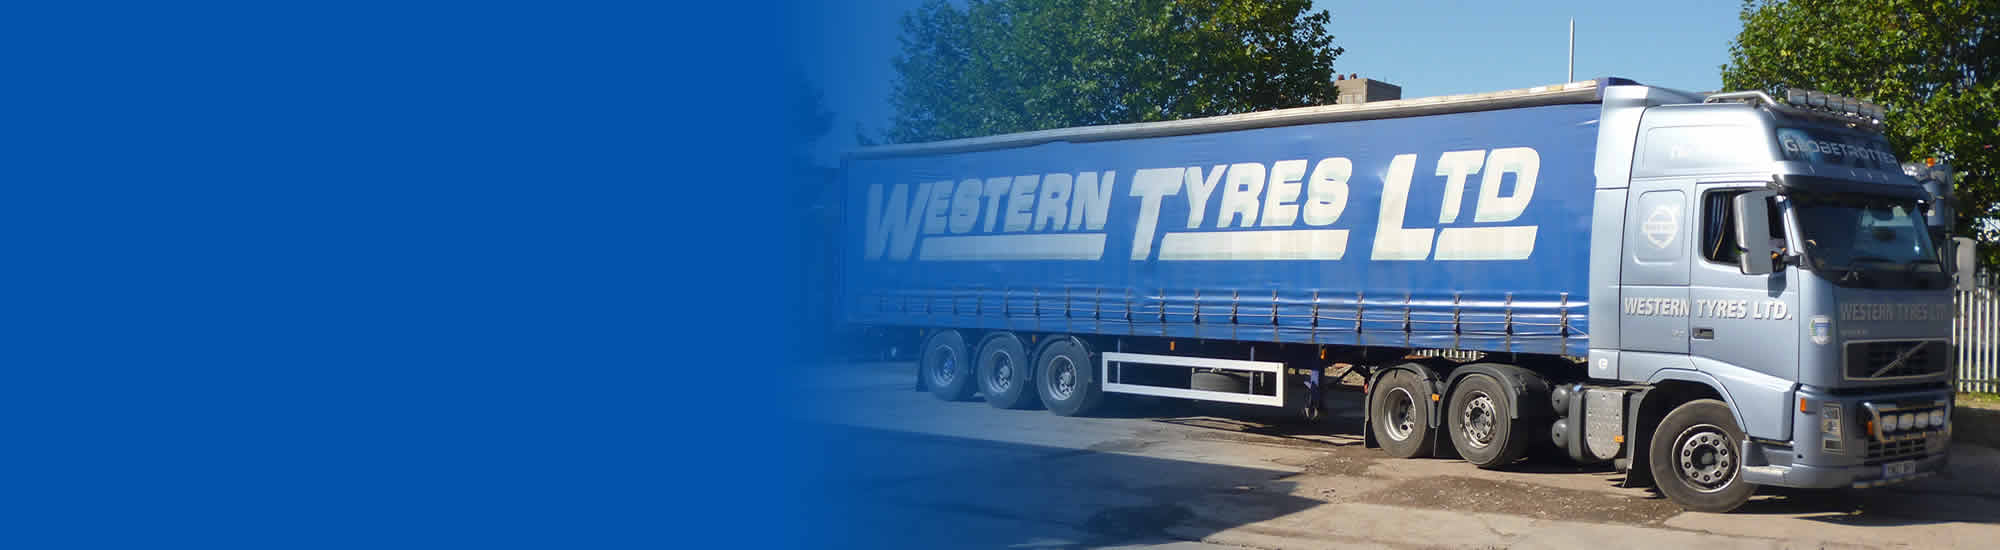 western tyres truck